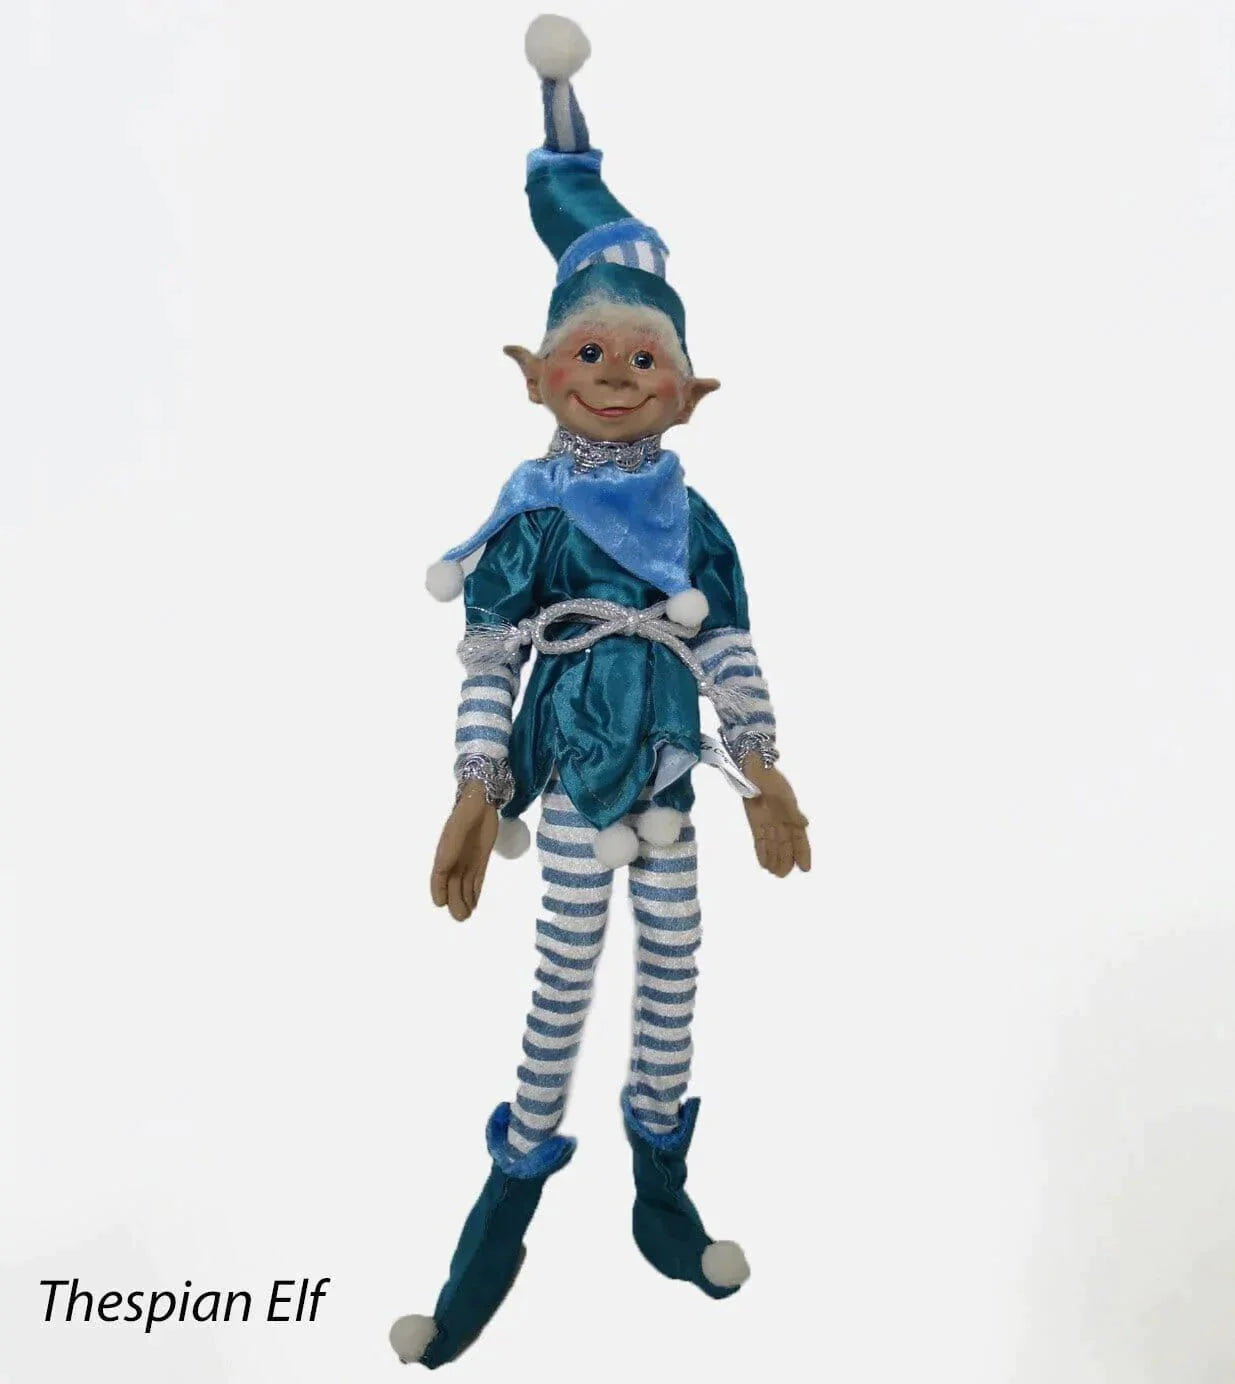 Thespian Elf